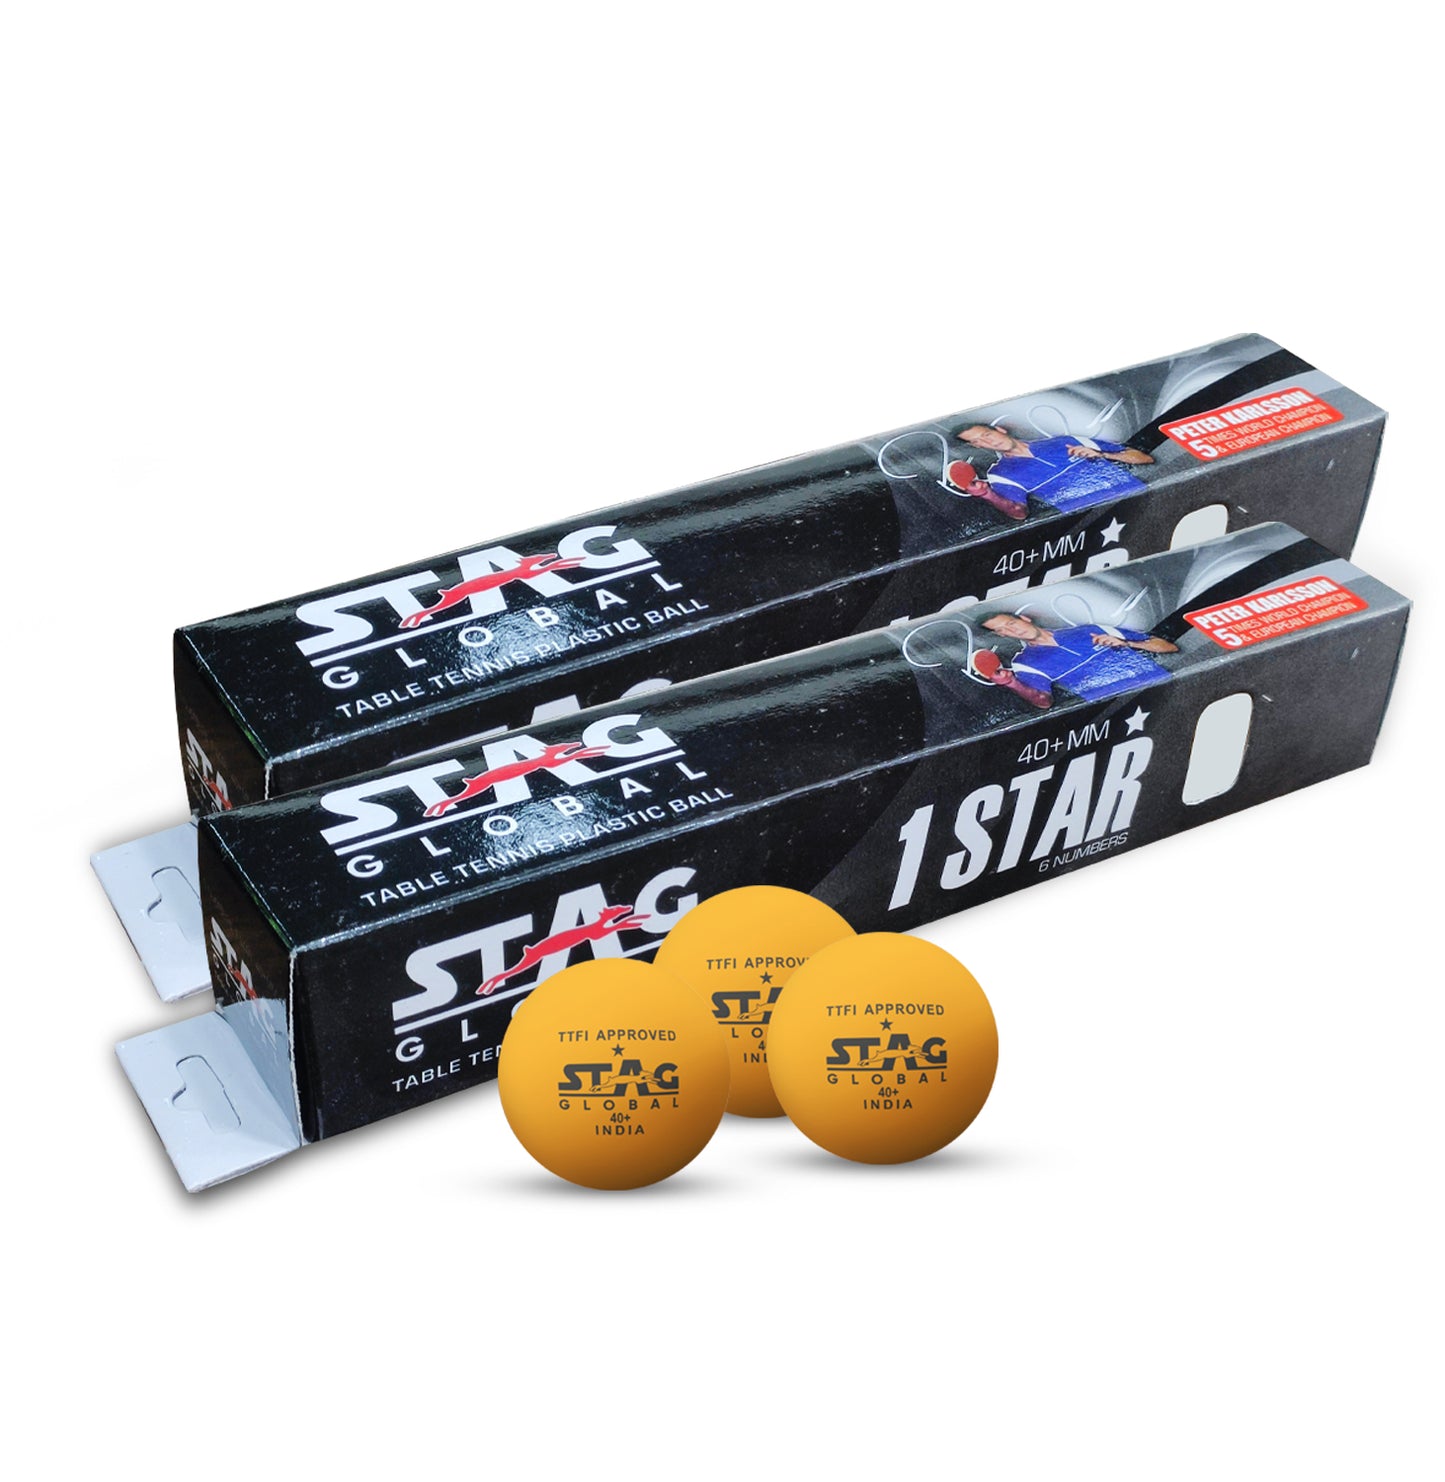 Stag 1 Star Table Tennis  Orange ball